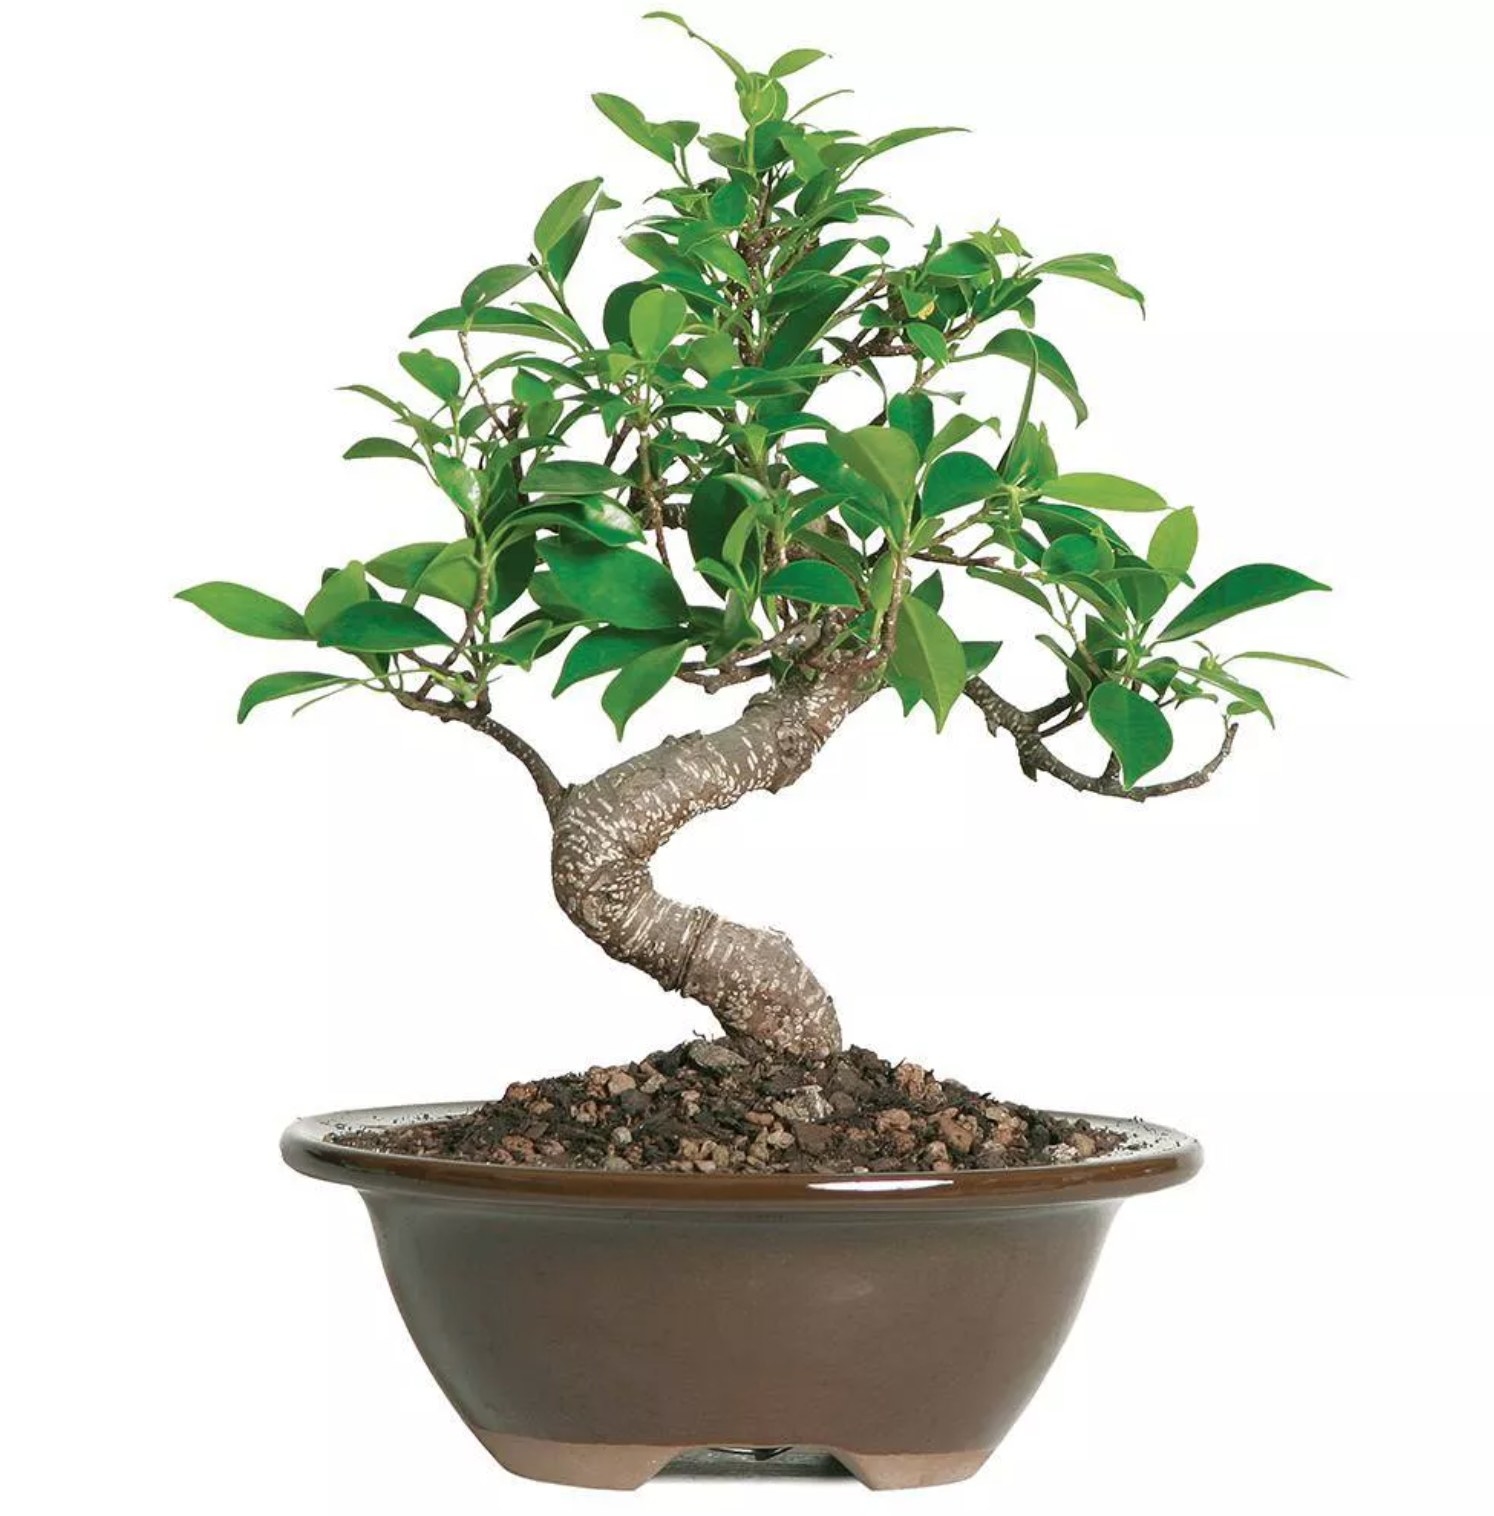 A small bonsai tree 